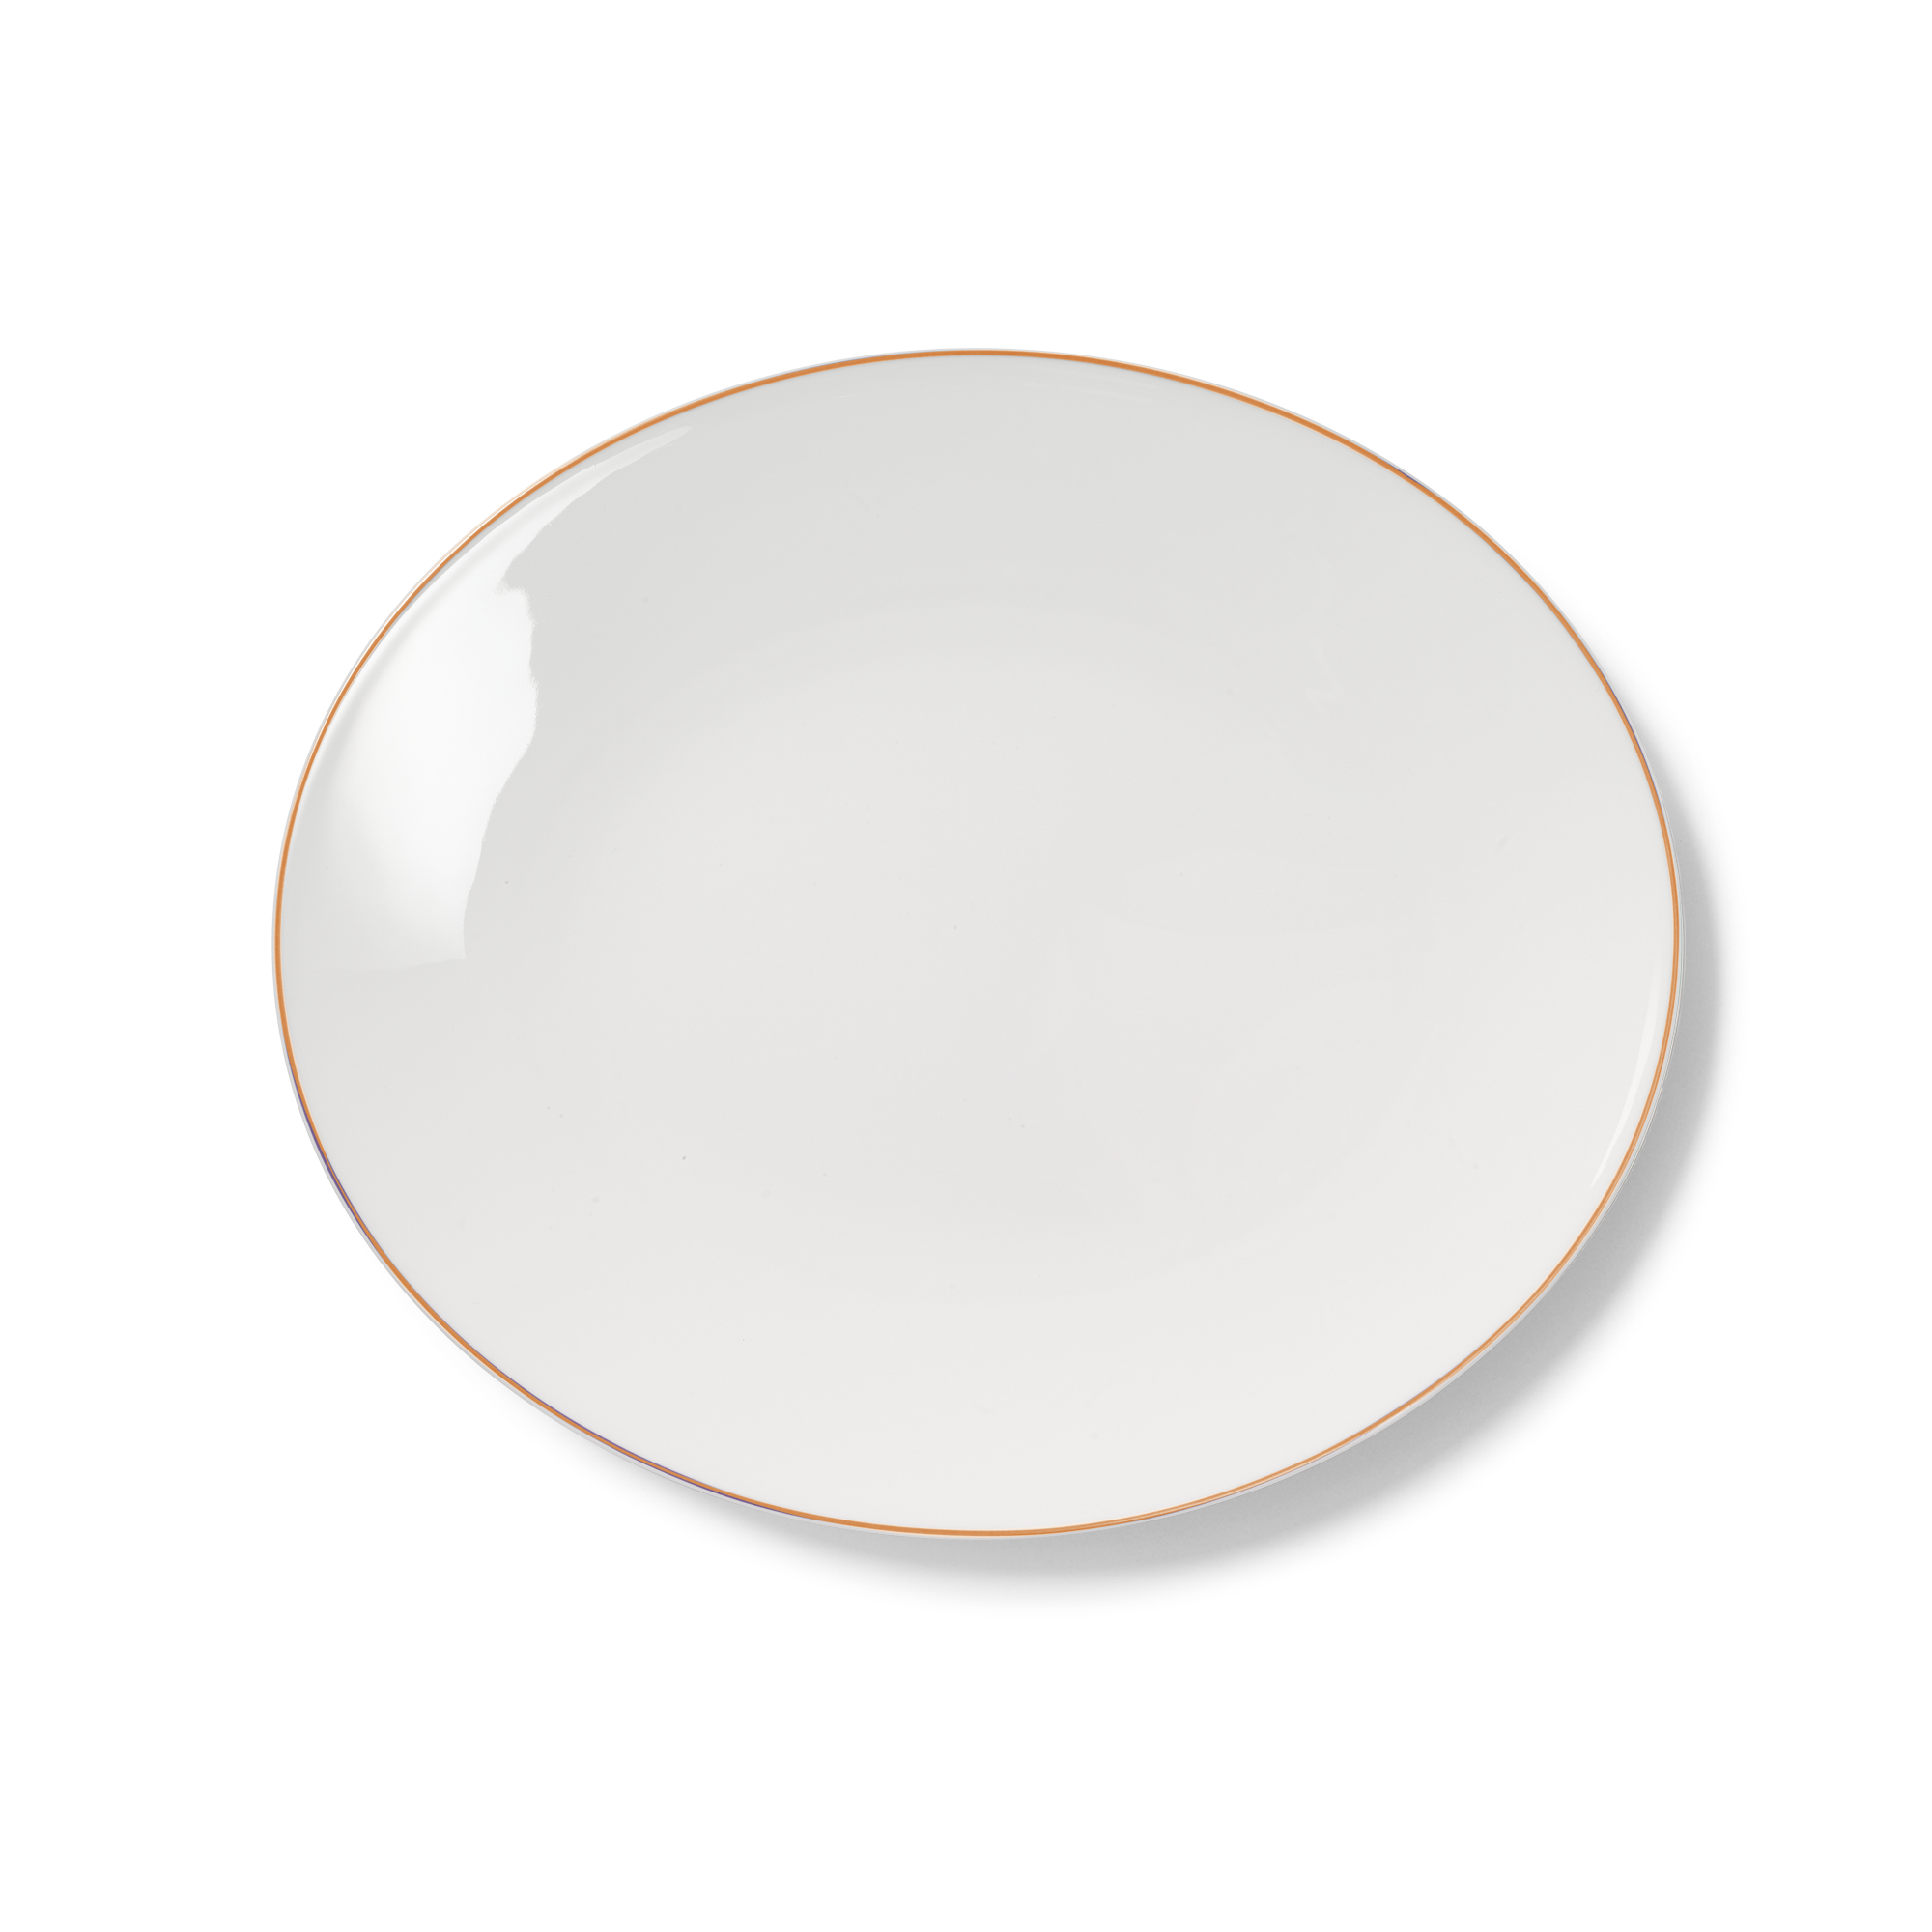 Platte oval / Fischteller 32 cm Simplicity Orange Dibbern